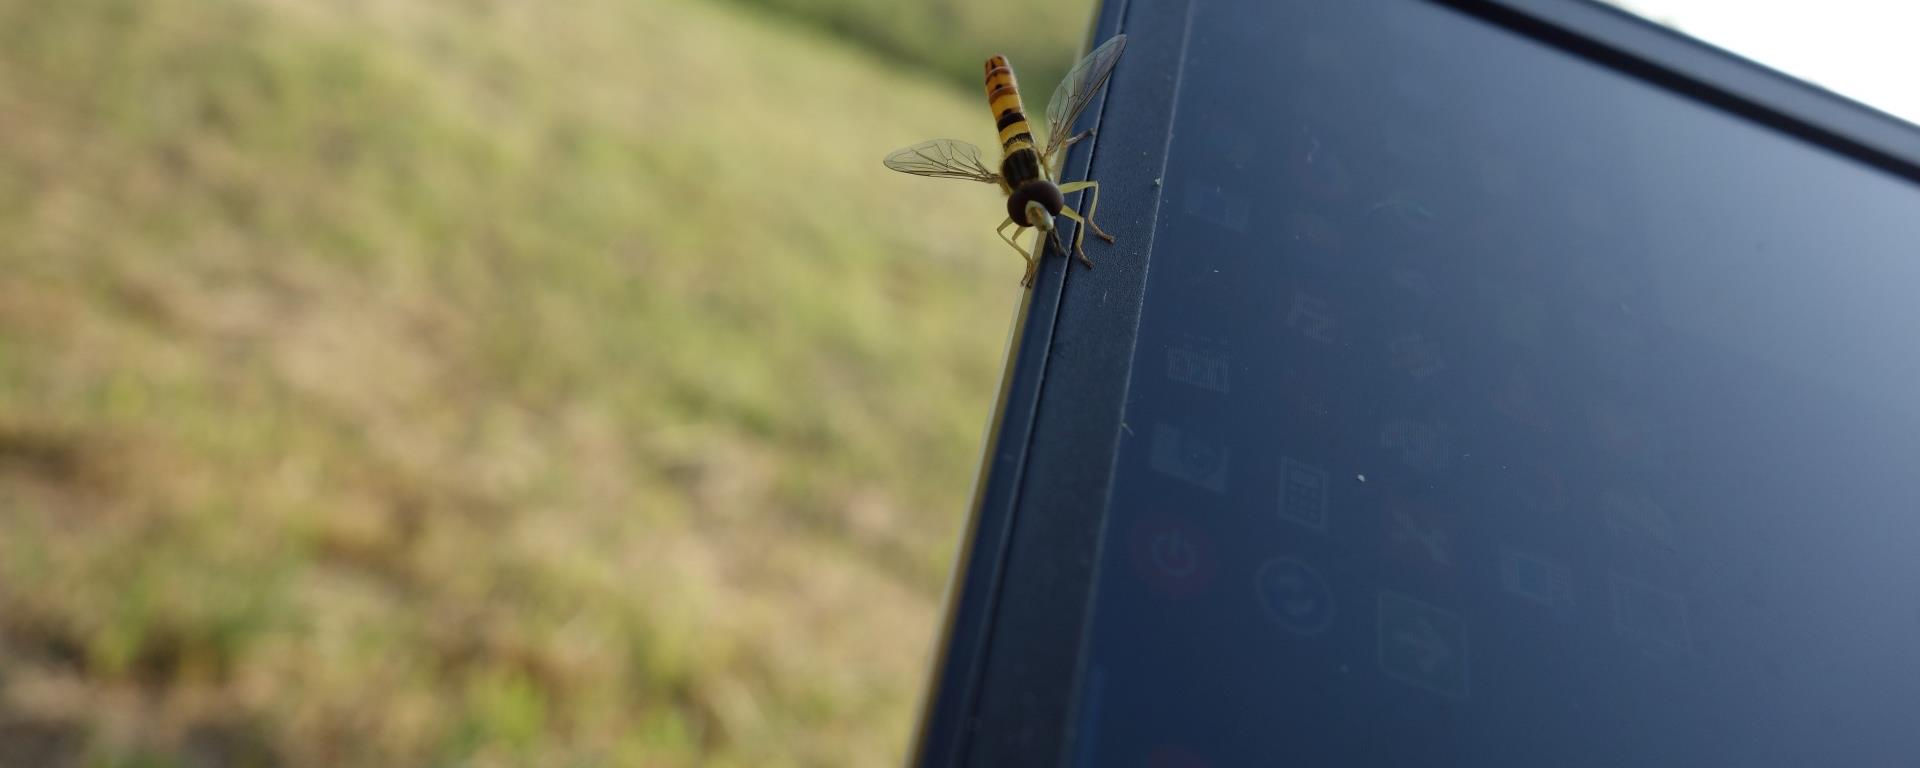 Displej notebooku a hmyz